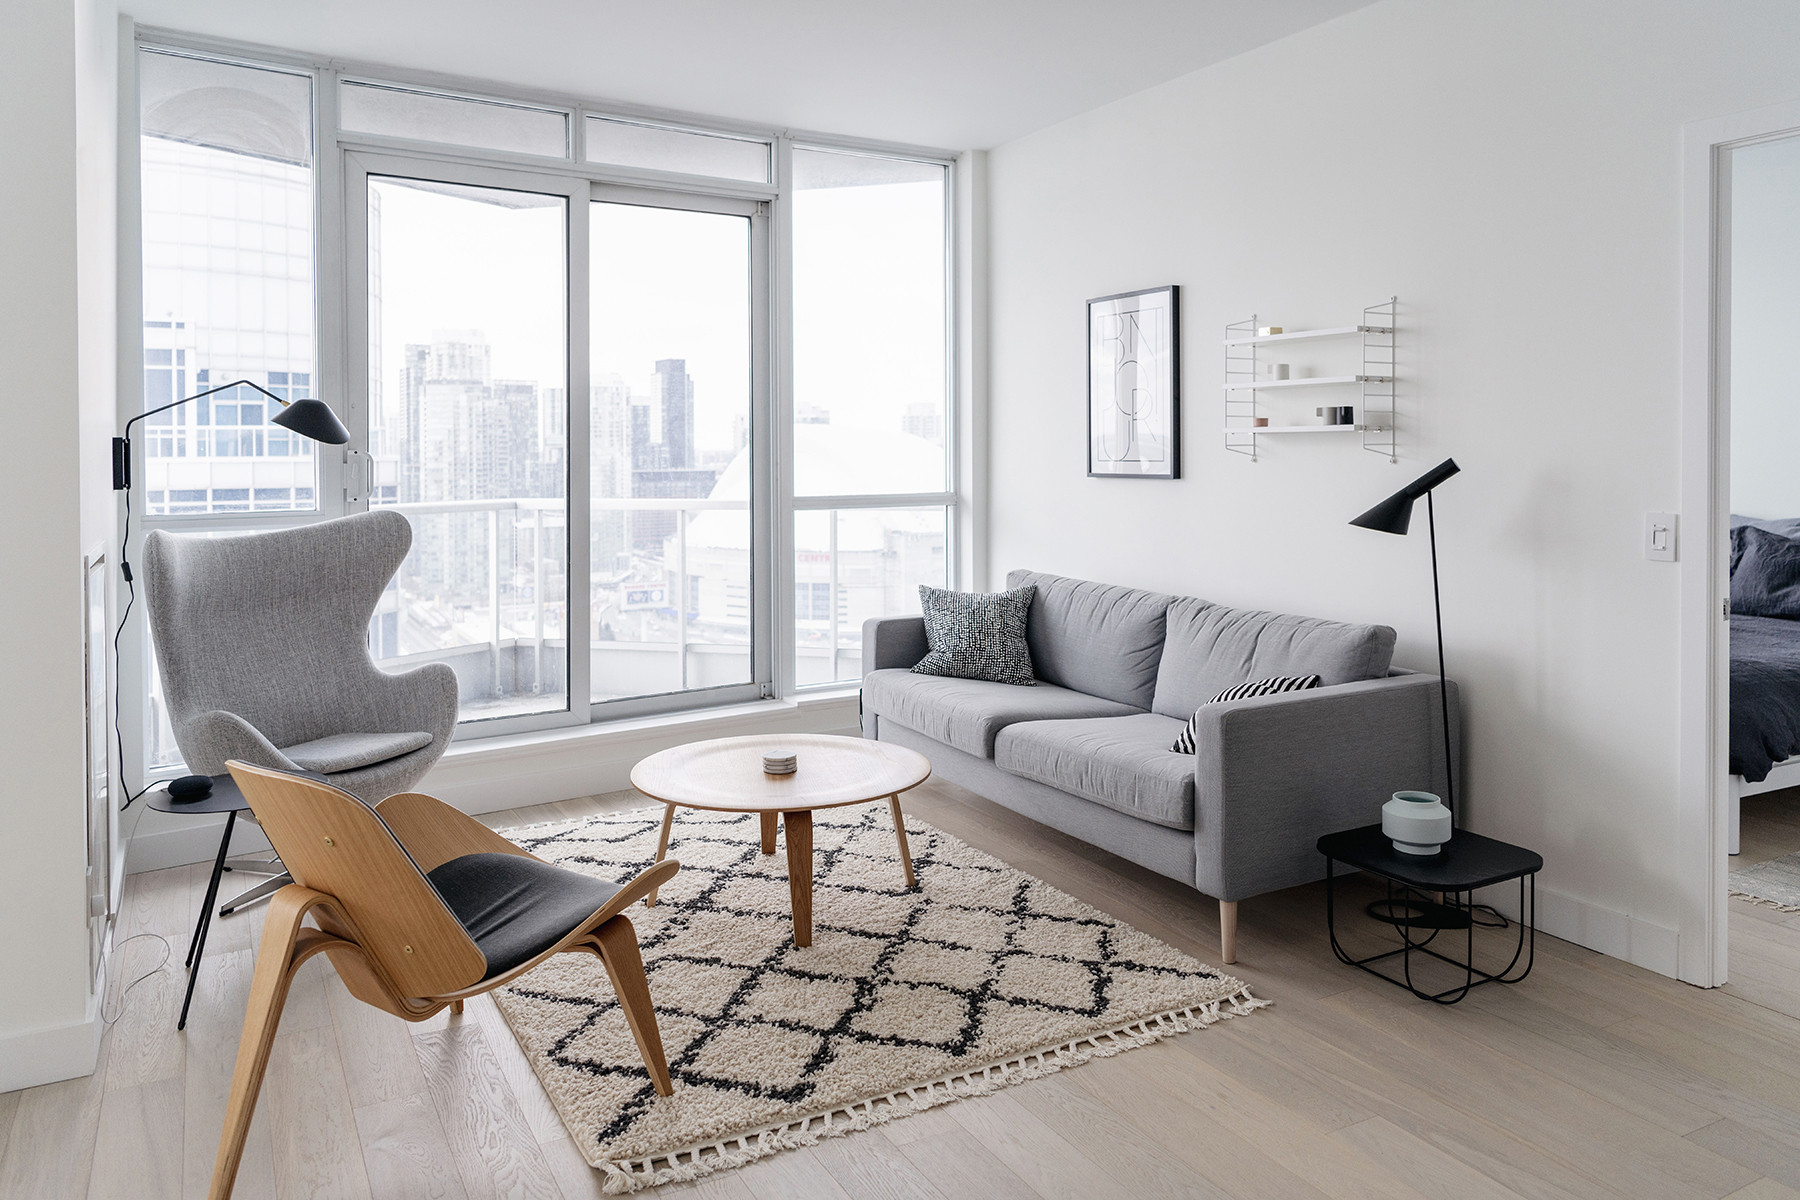 Minimalist Decor Living Room
 Condo living room tour a bright minimalist space